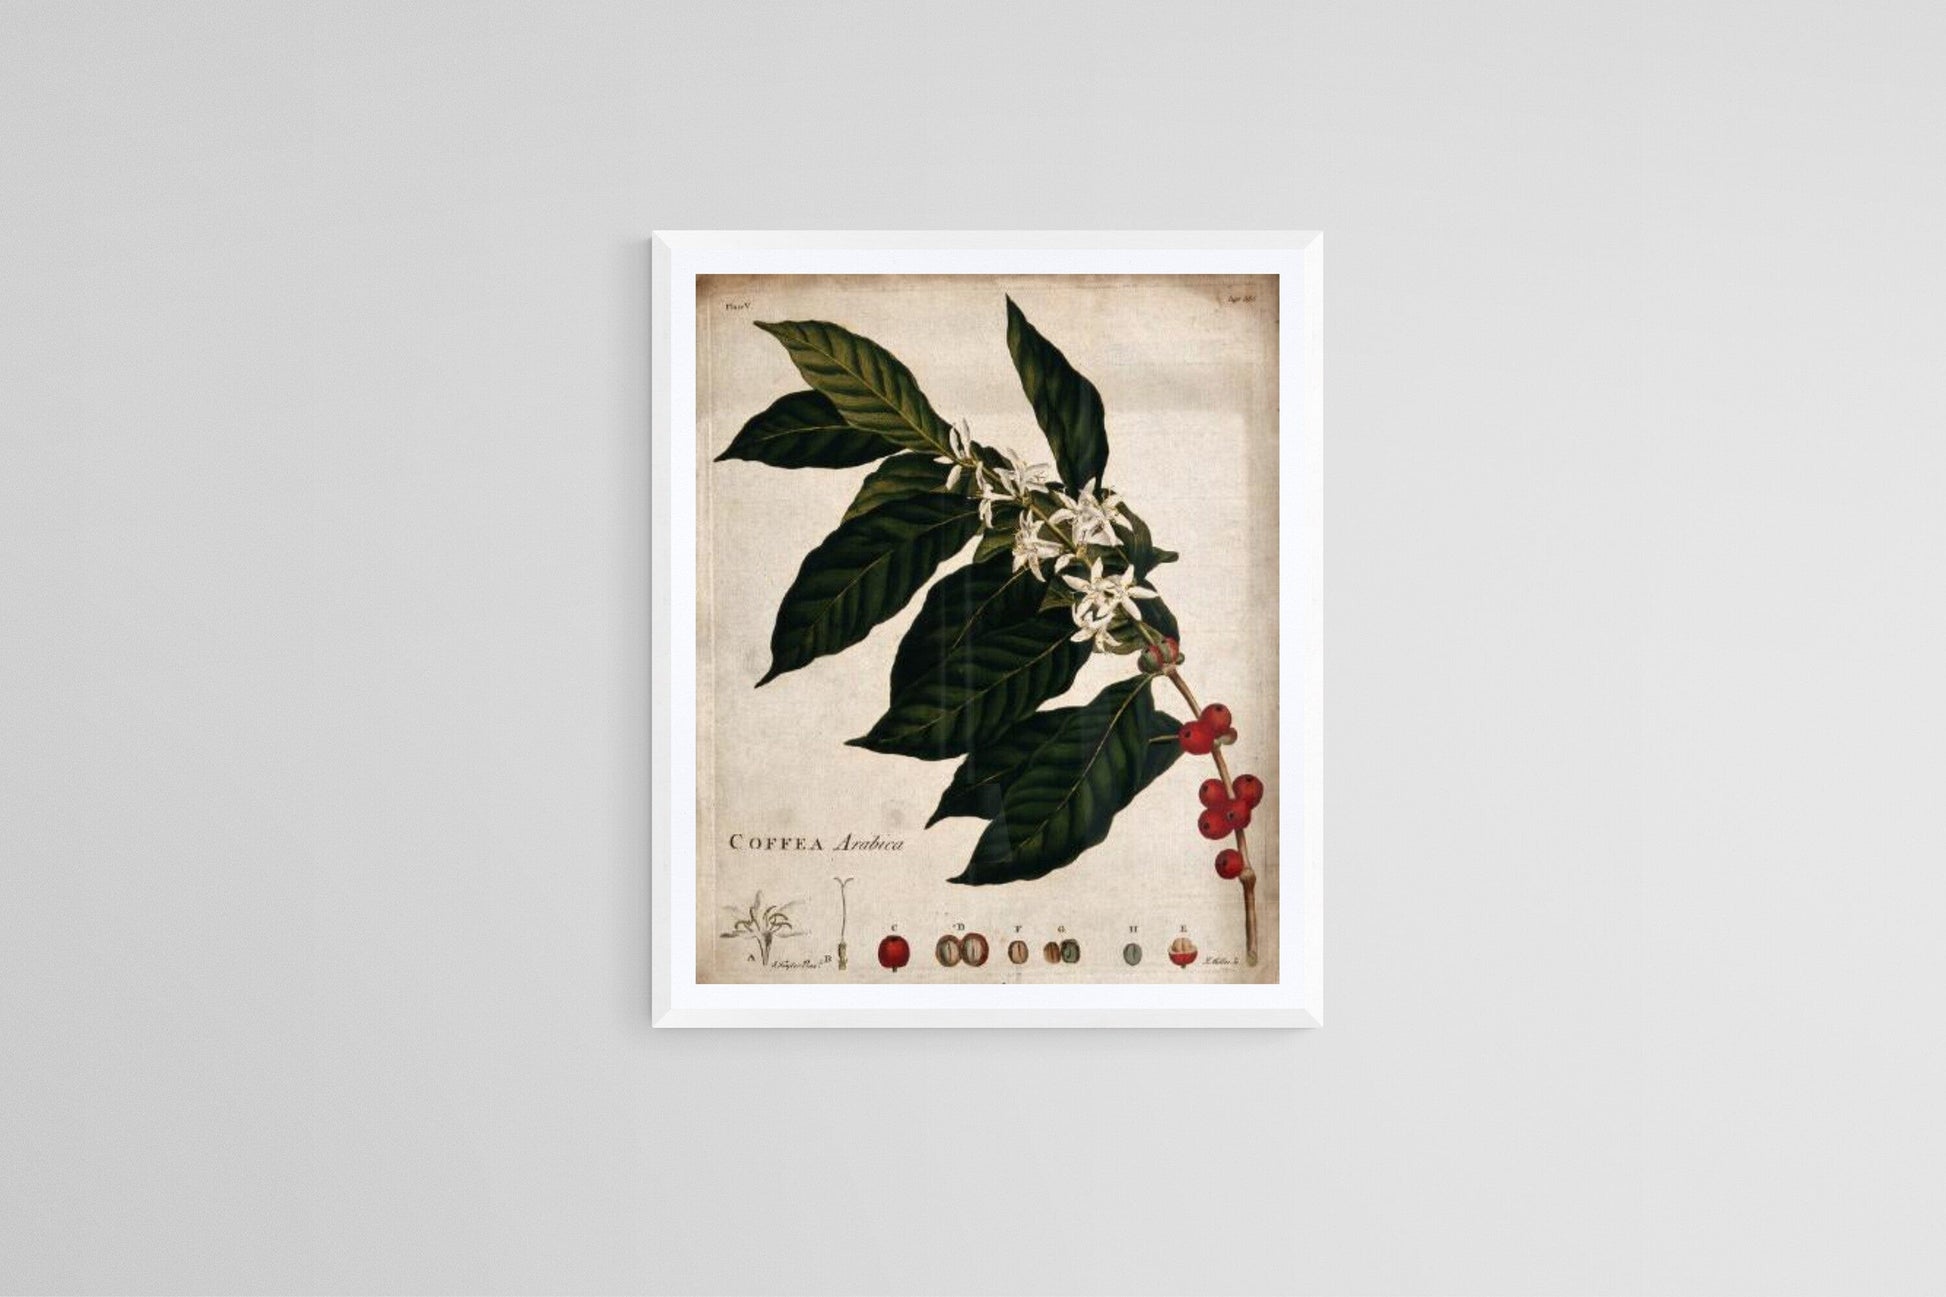 Coffee plant (c1774) | Botanical prints | Kitchen wall art |  J. Miller Posters, Prints, & Visual Artwork The Trumpet Shop   